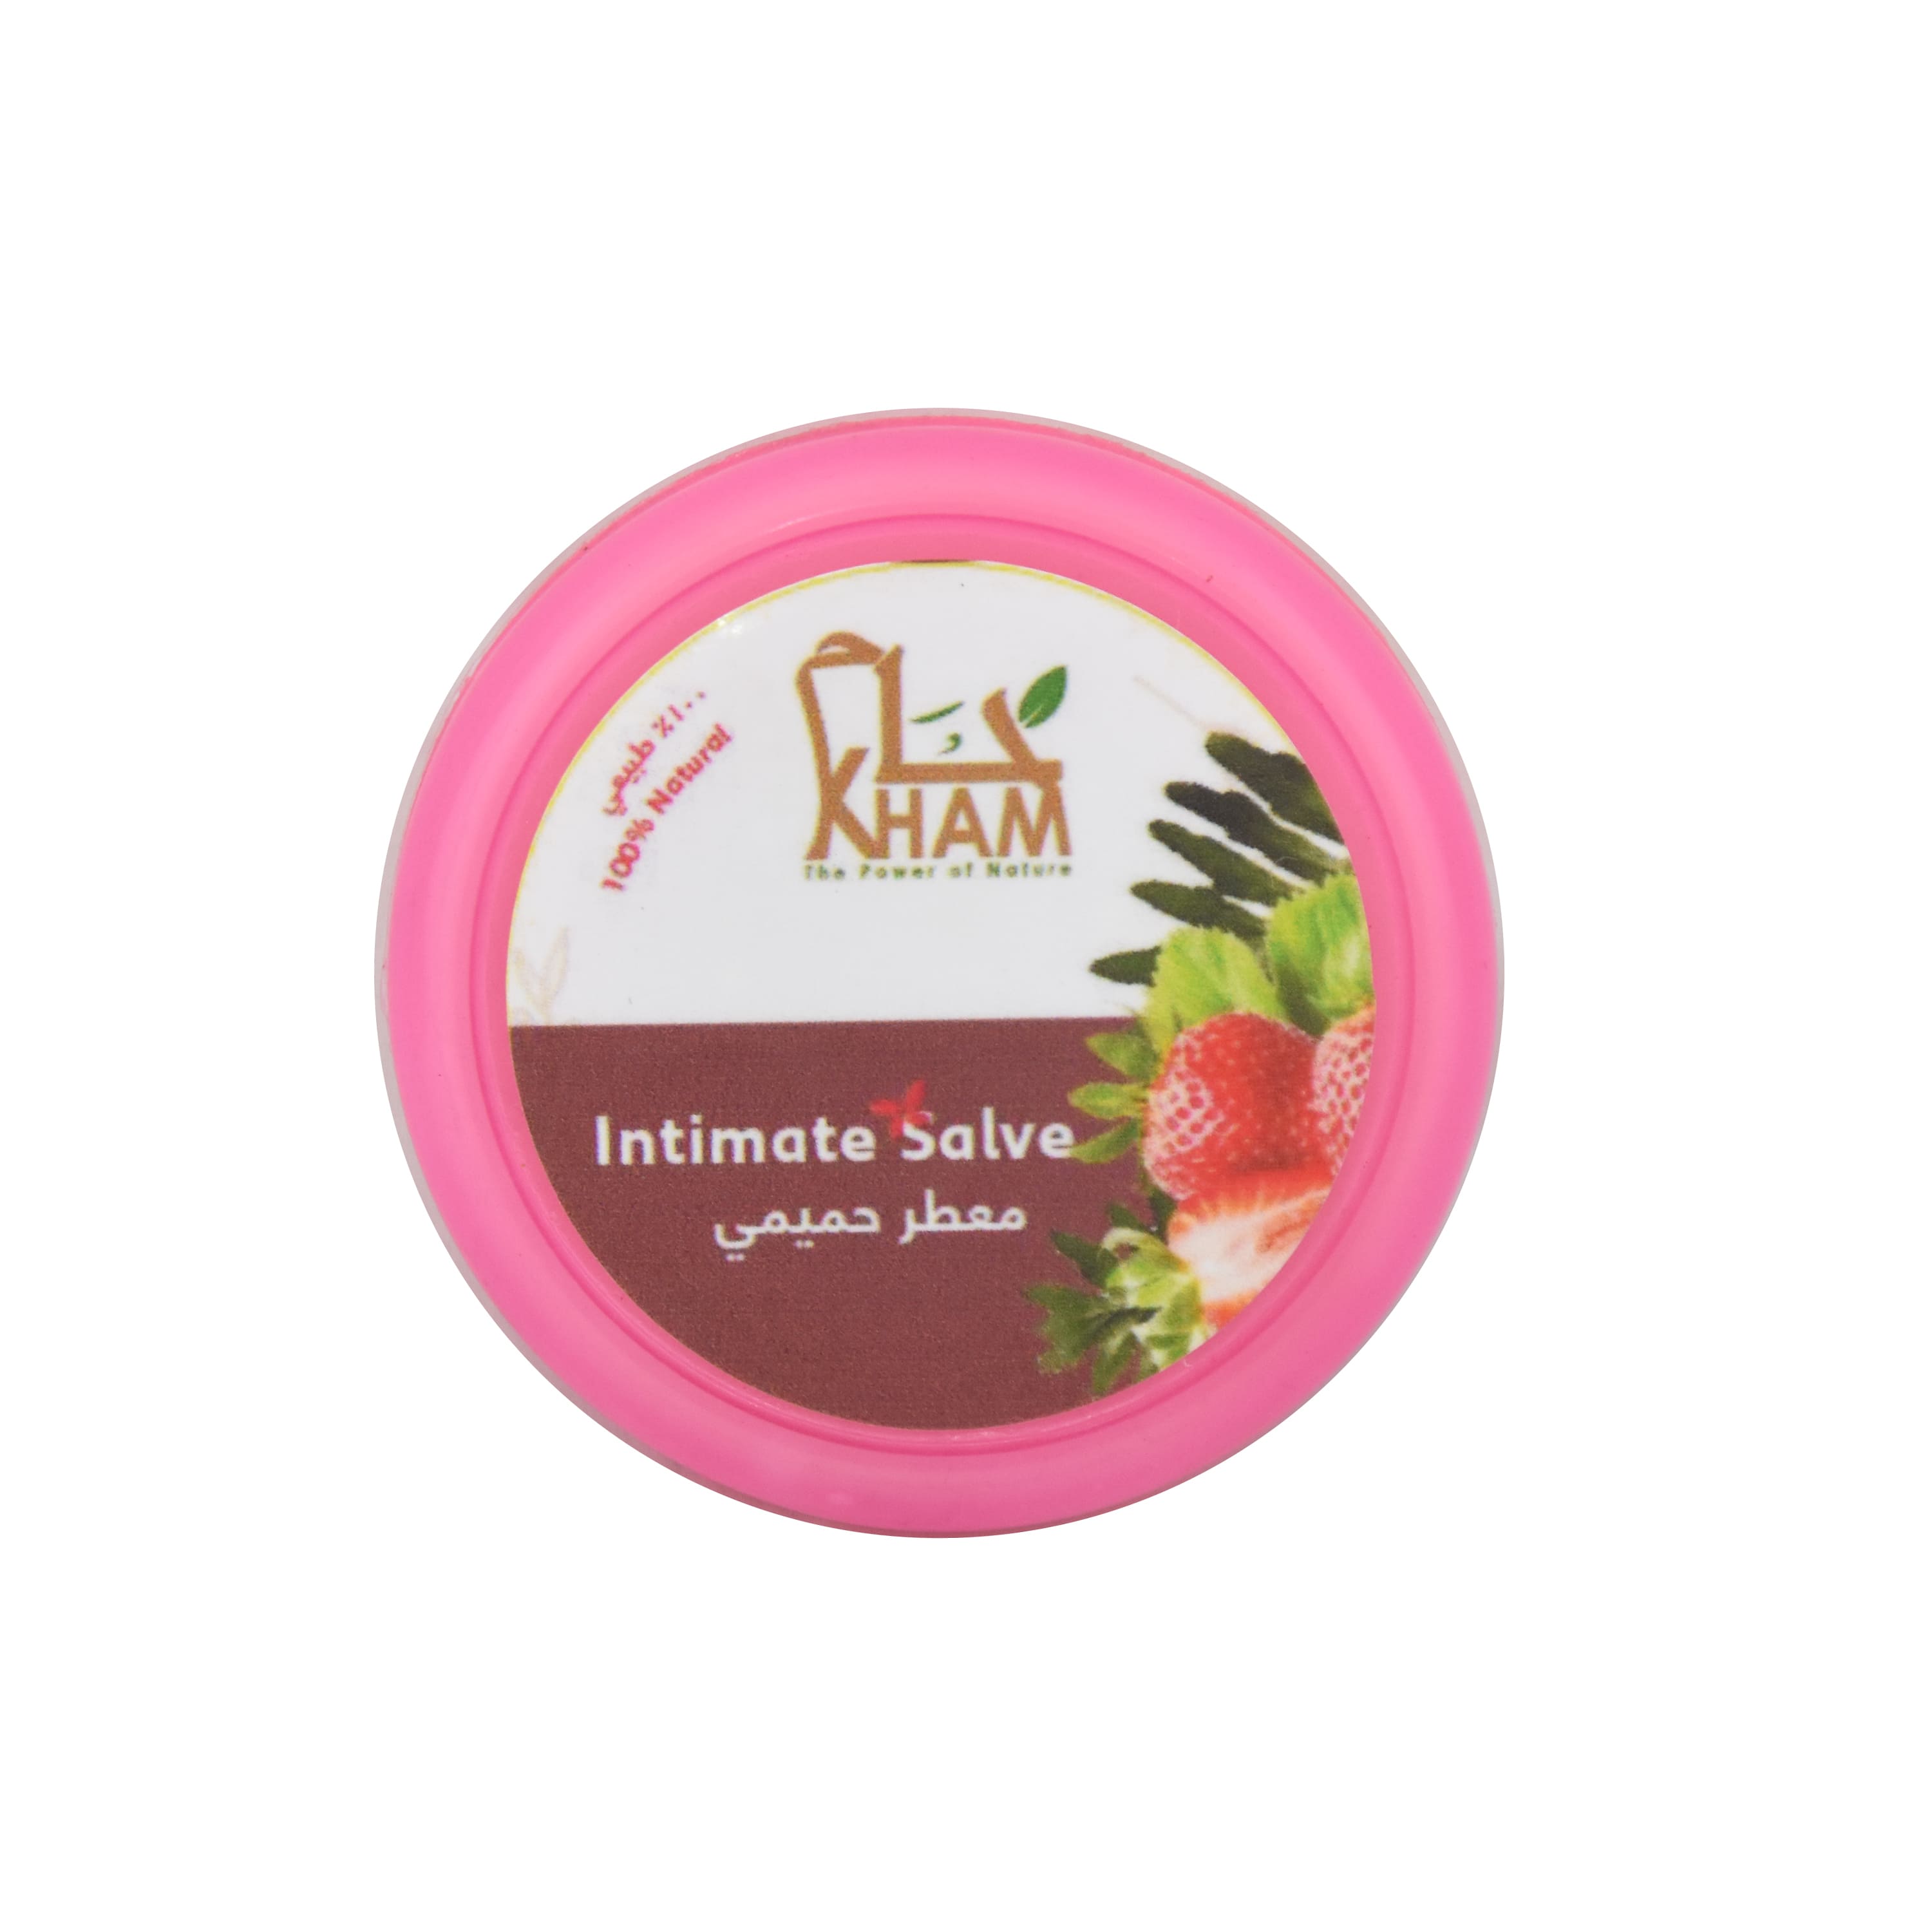 Kham Strawberry Intimate Salve (100 ml) To perfume and moisturize sensitive areas